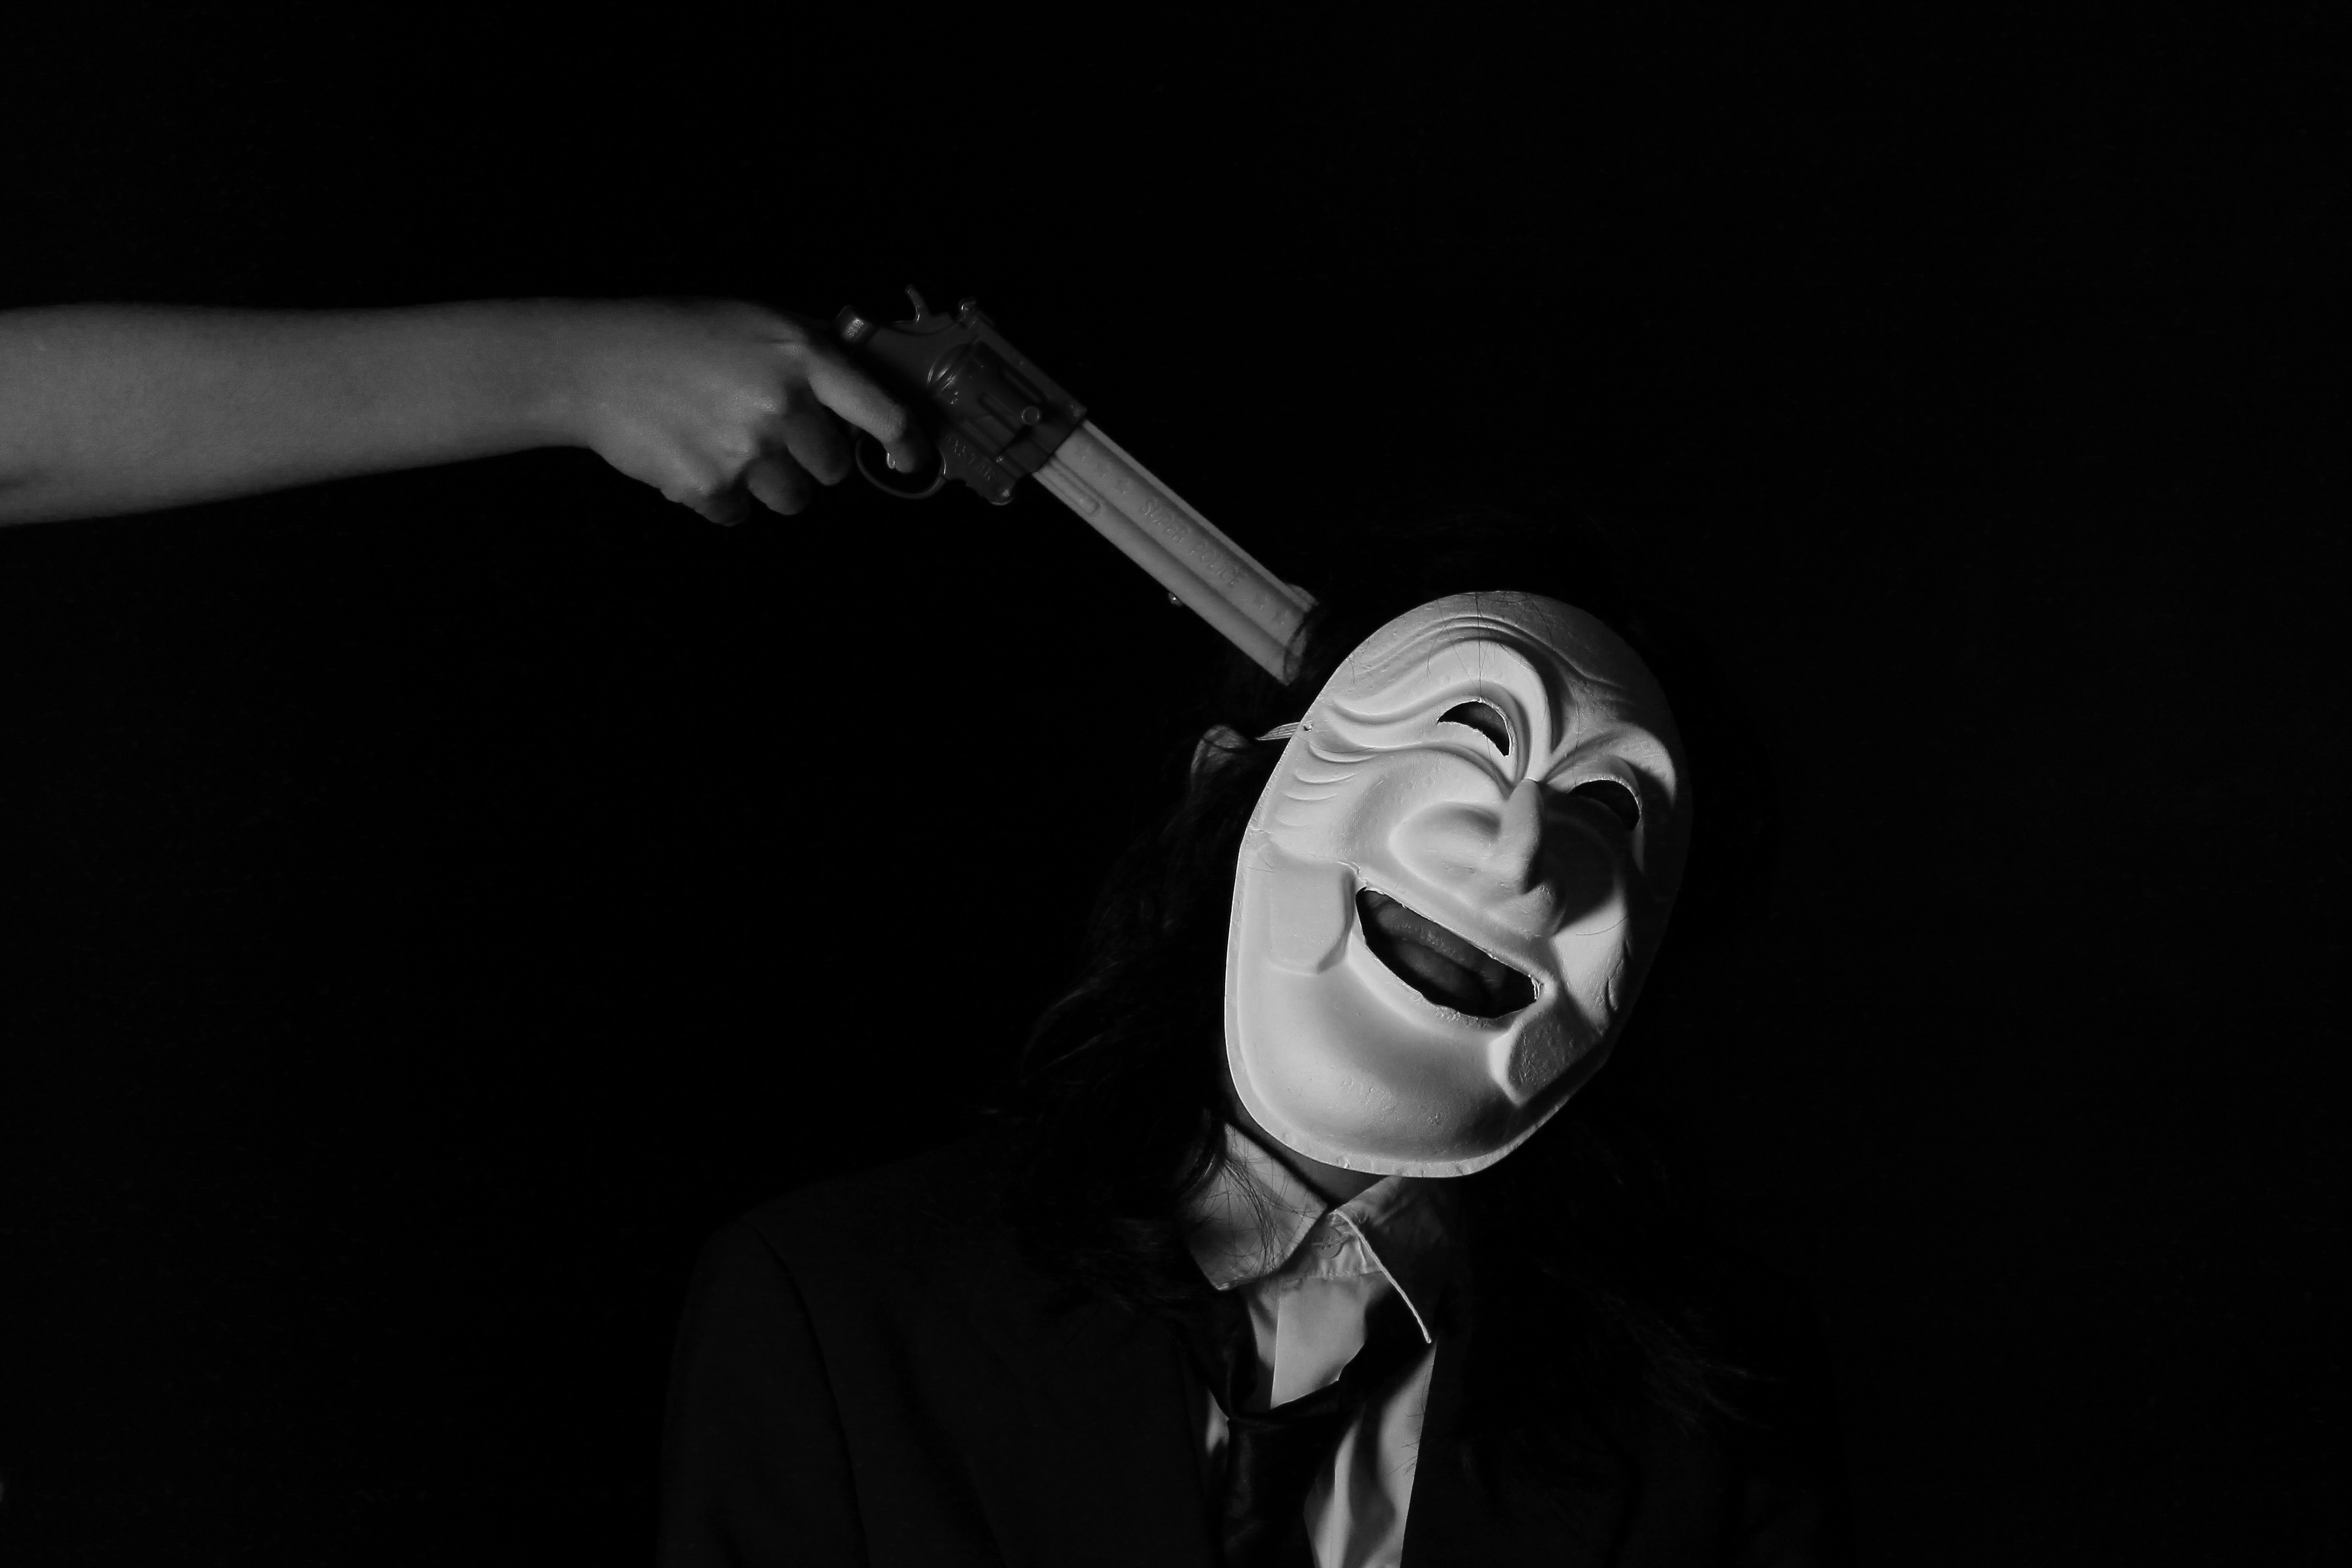 man in white mask wearing black necktie with gun pointed on his head